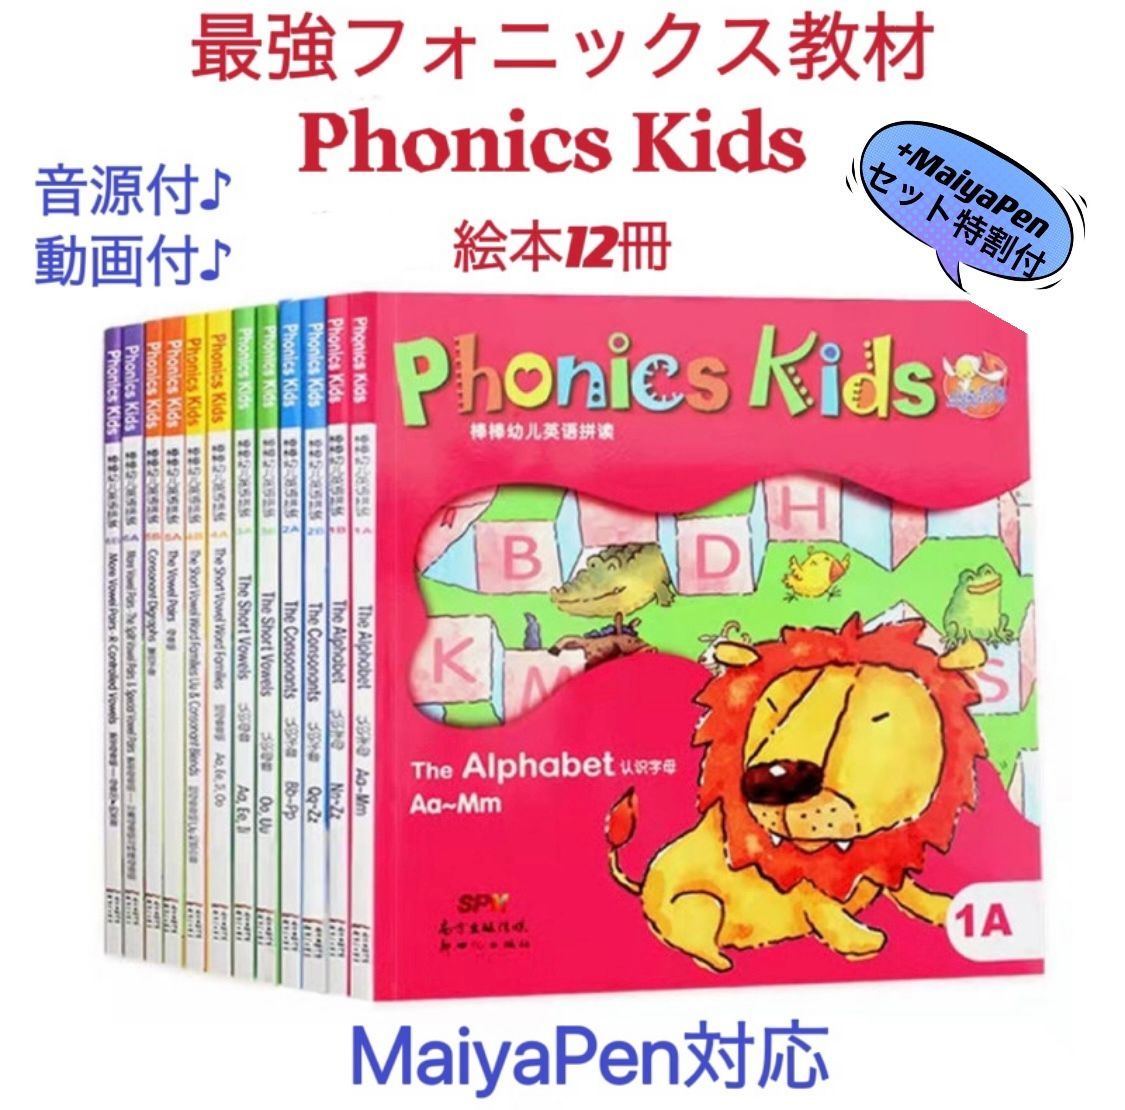 Phonics kids 英語教材12冊セット フォニックスキッズ